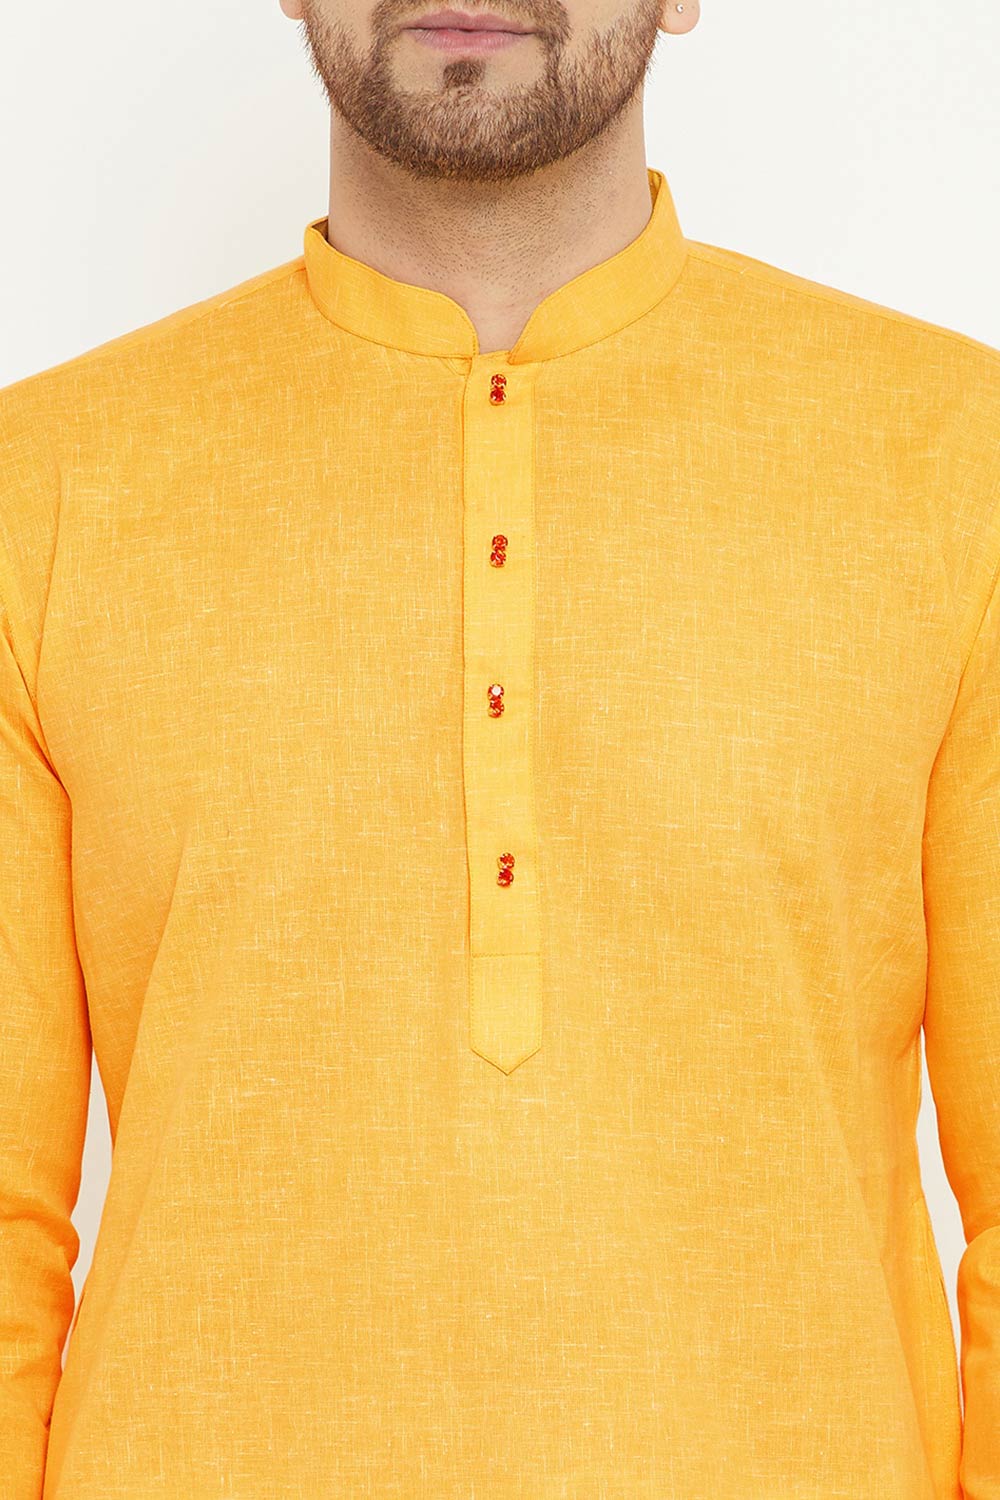 Buy Men's blended Cotton Solid Kurta in Yellow - Online